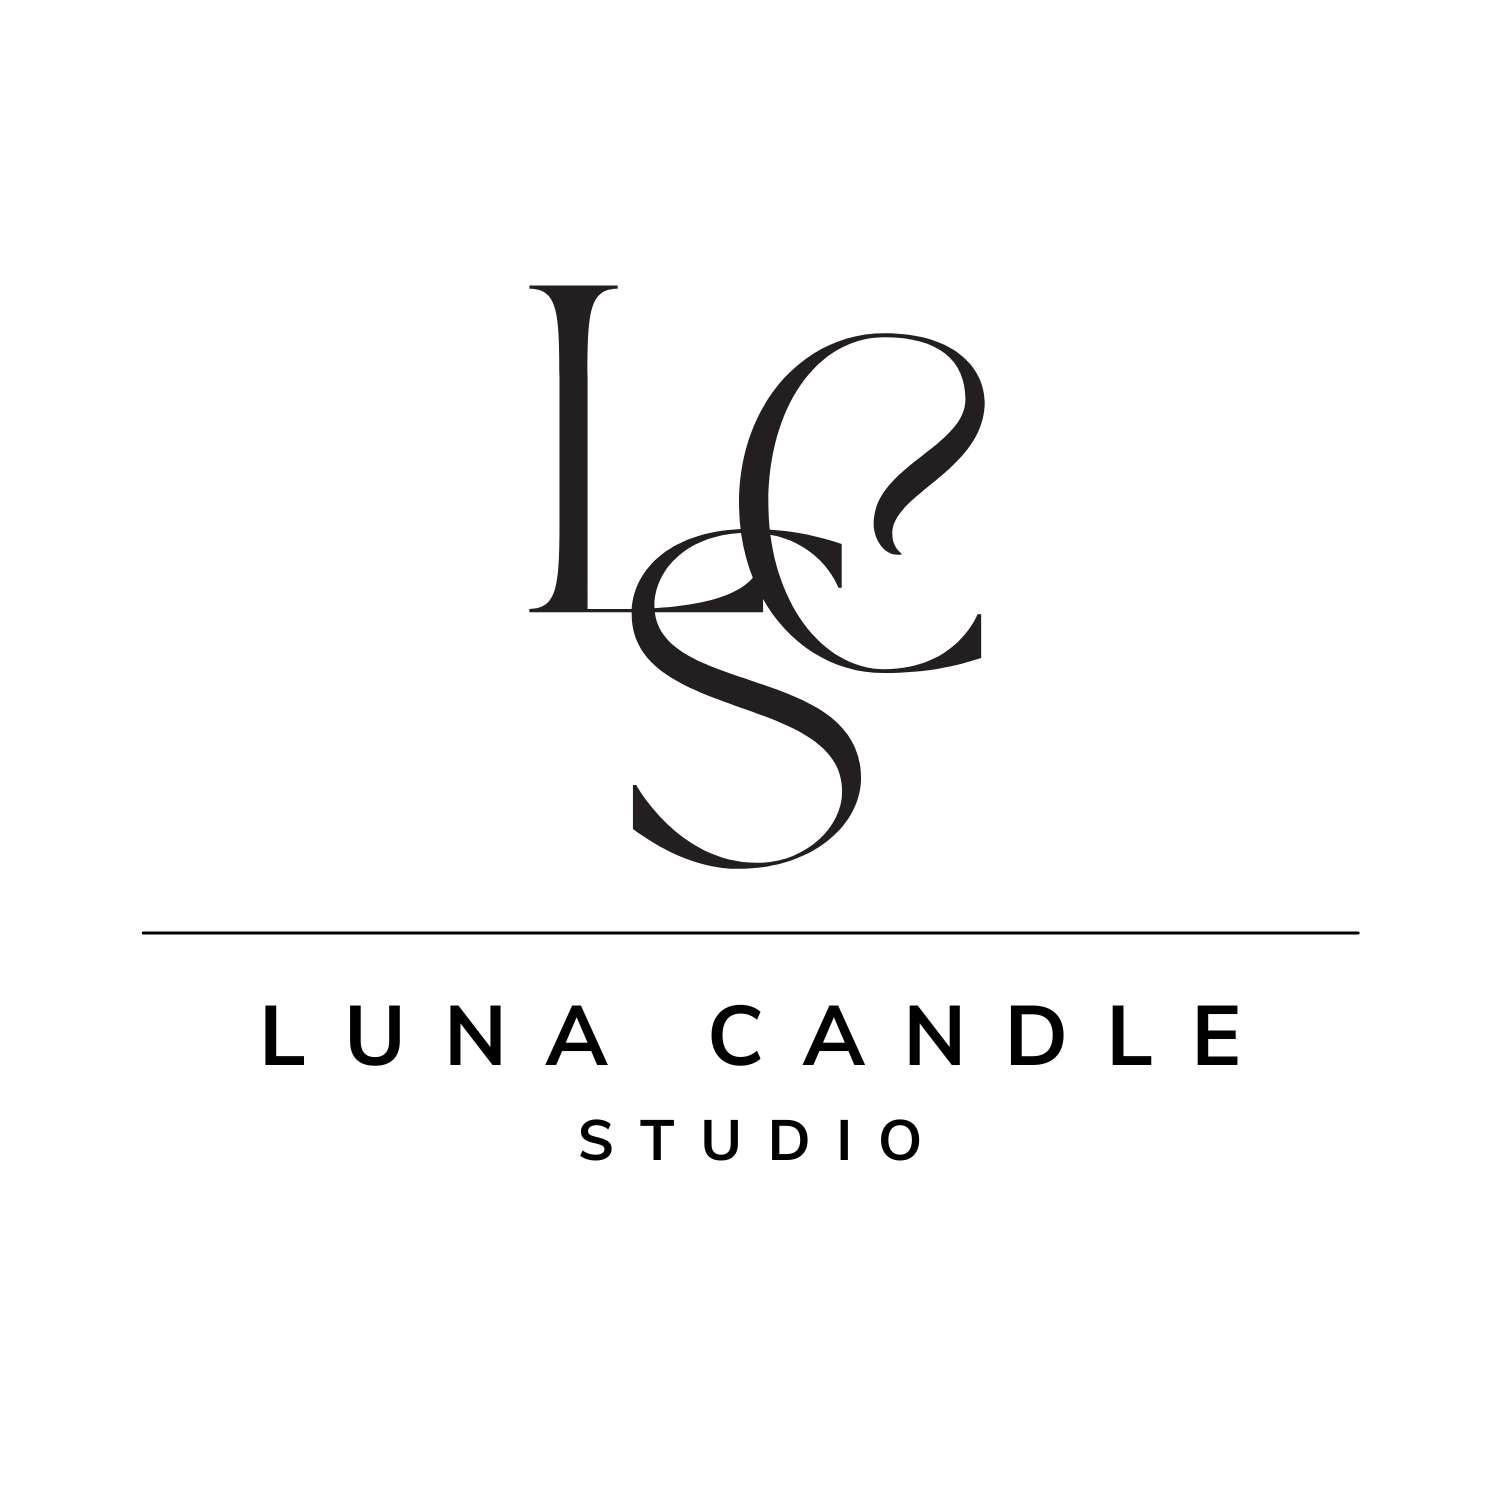 Luna Candle Studio